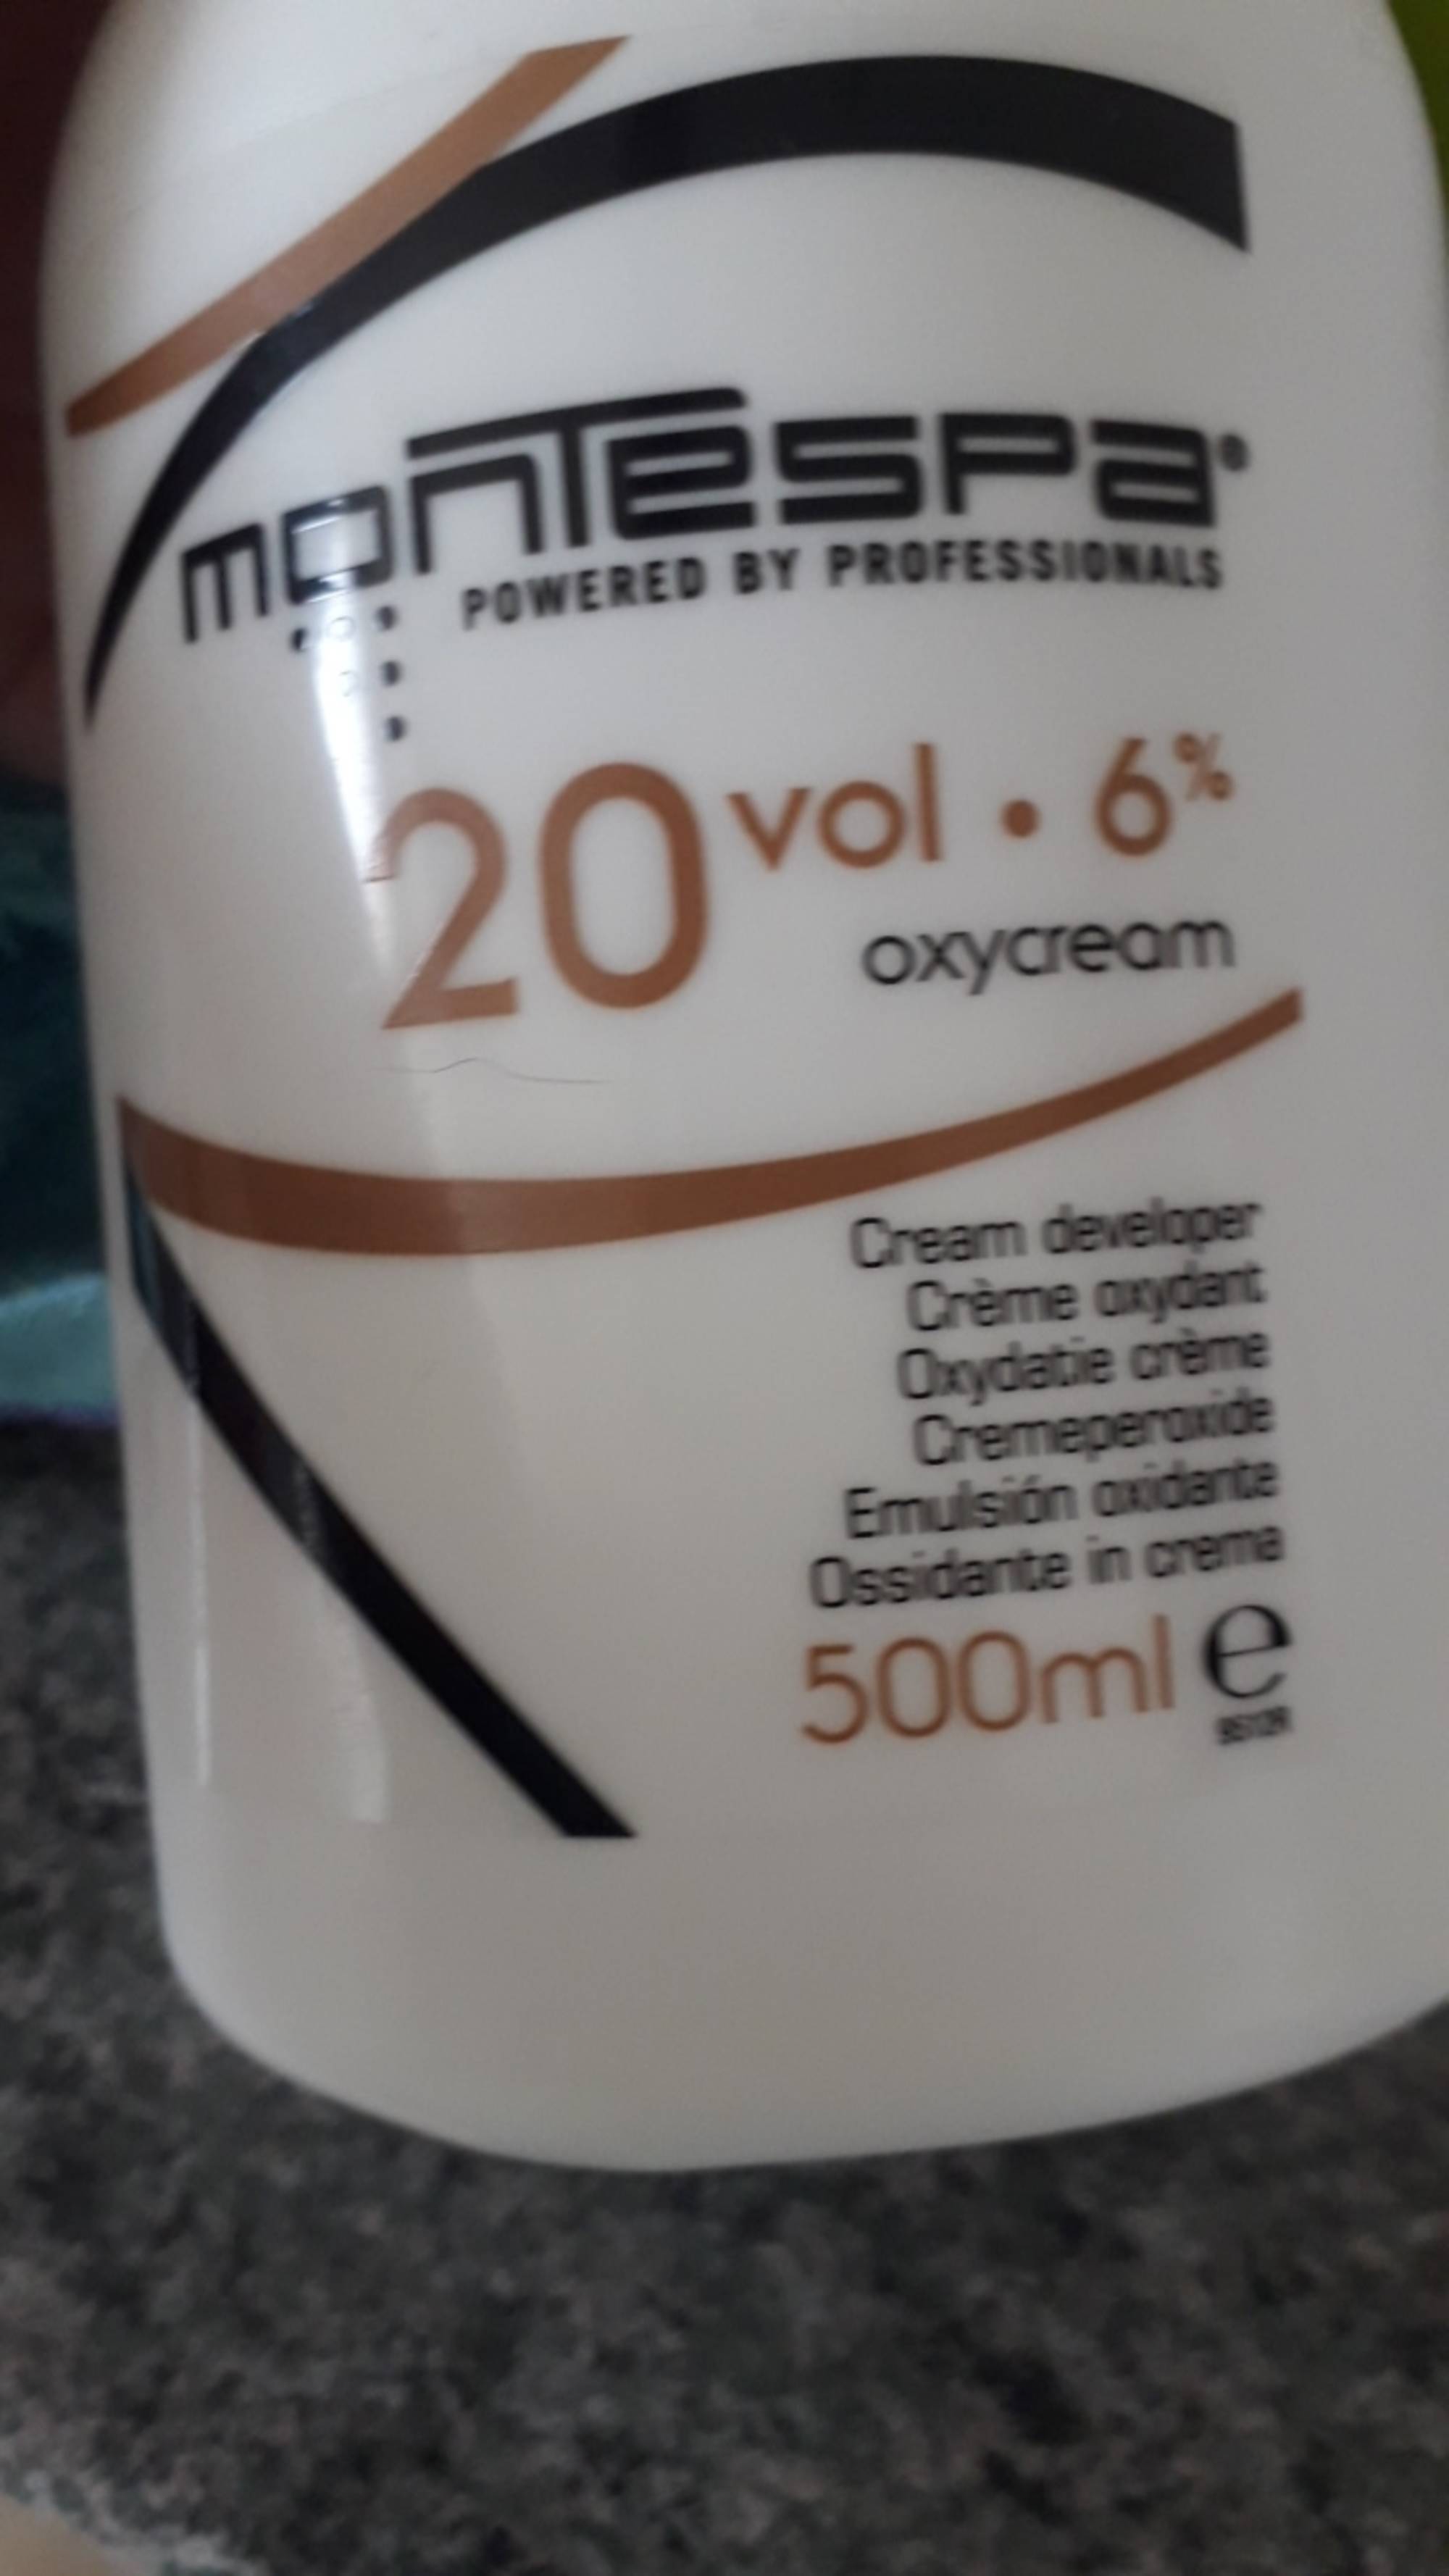 MONTESPA - 20 vol.6% oxycream - Crème oxydant